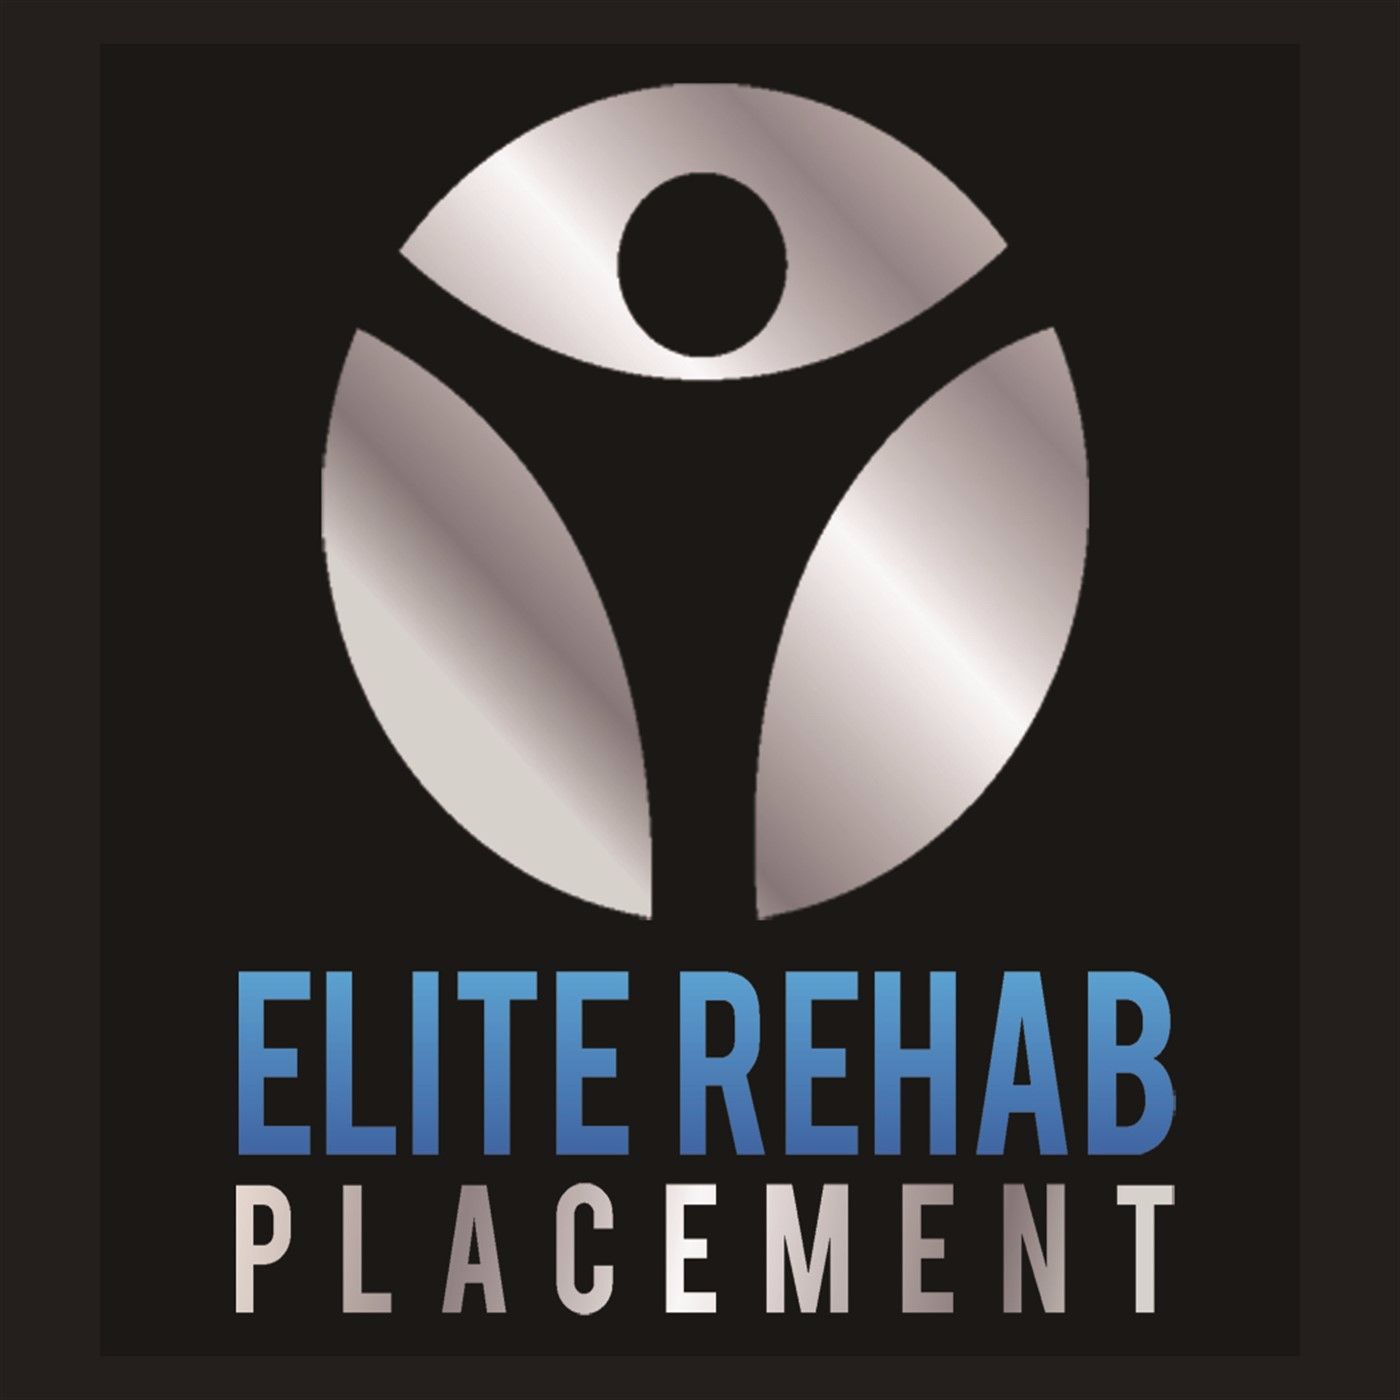 Elite Rehab Placement